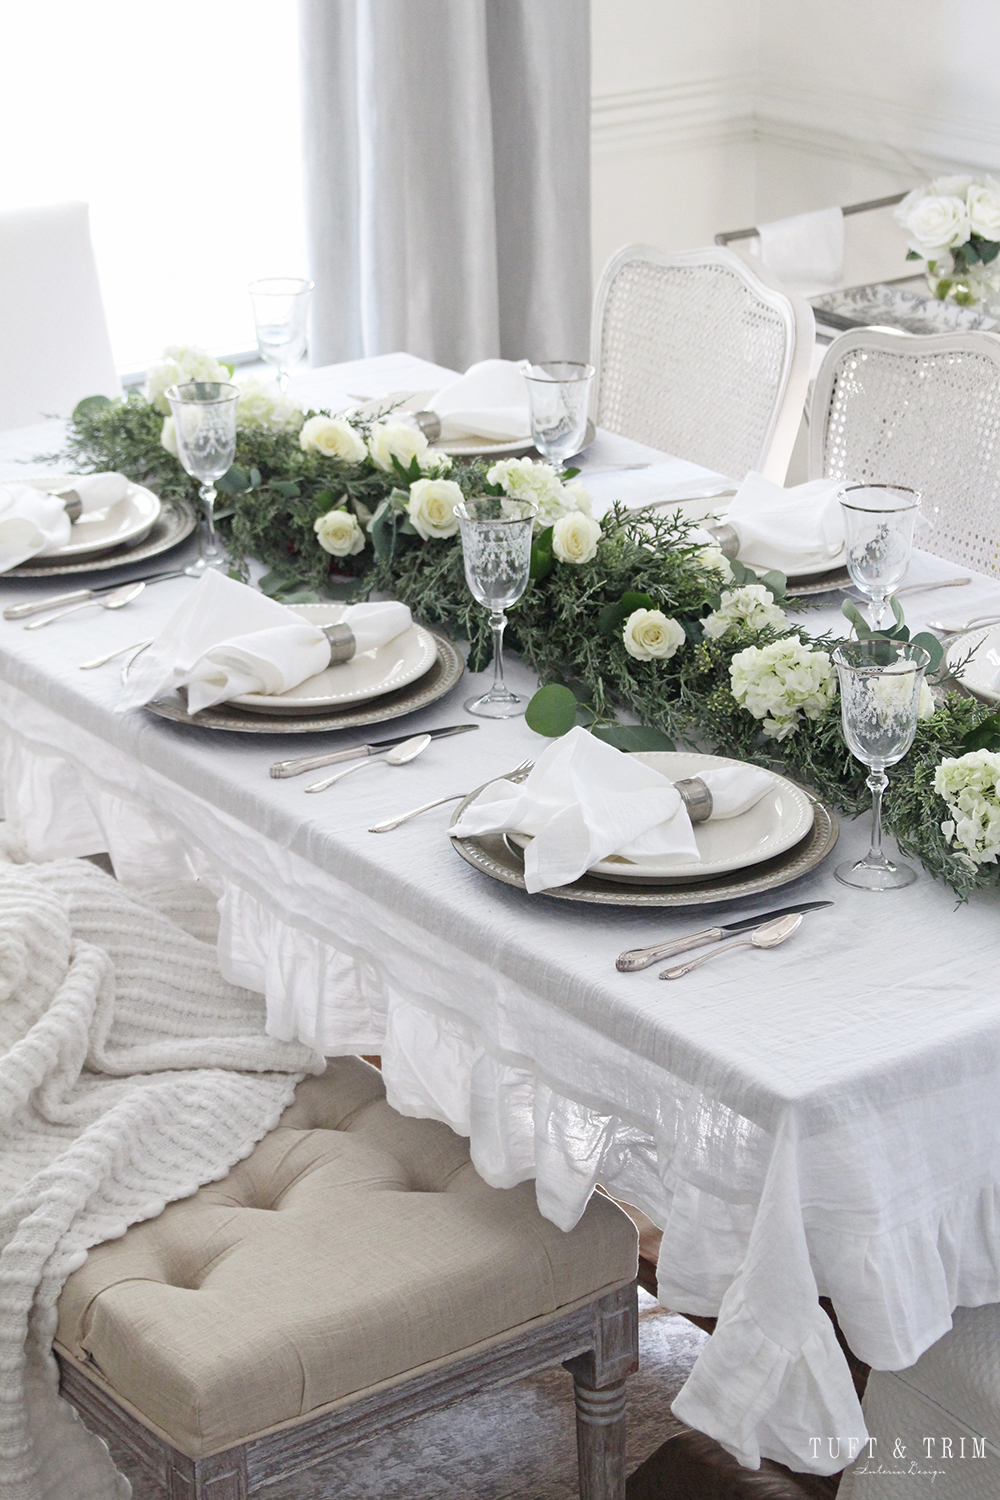 Classic & Elegant White Christmas Tablescape with Tuft & Trim Interior Design